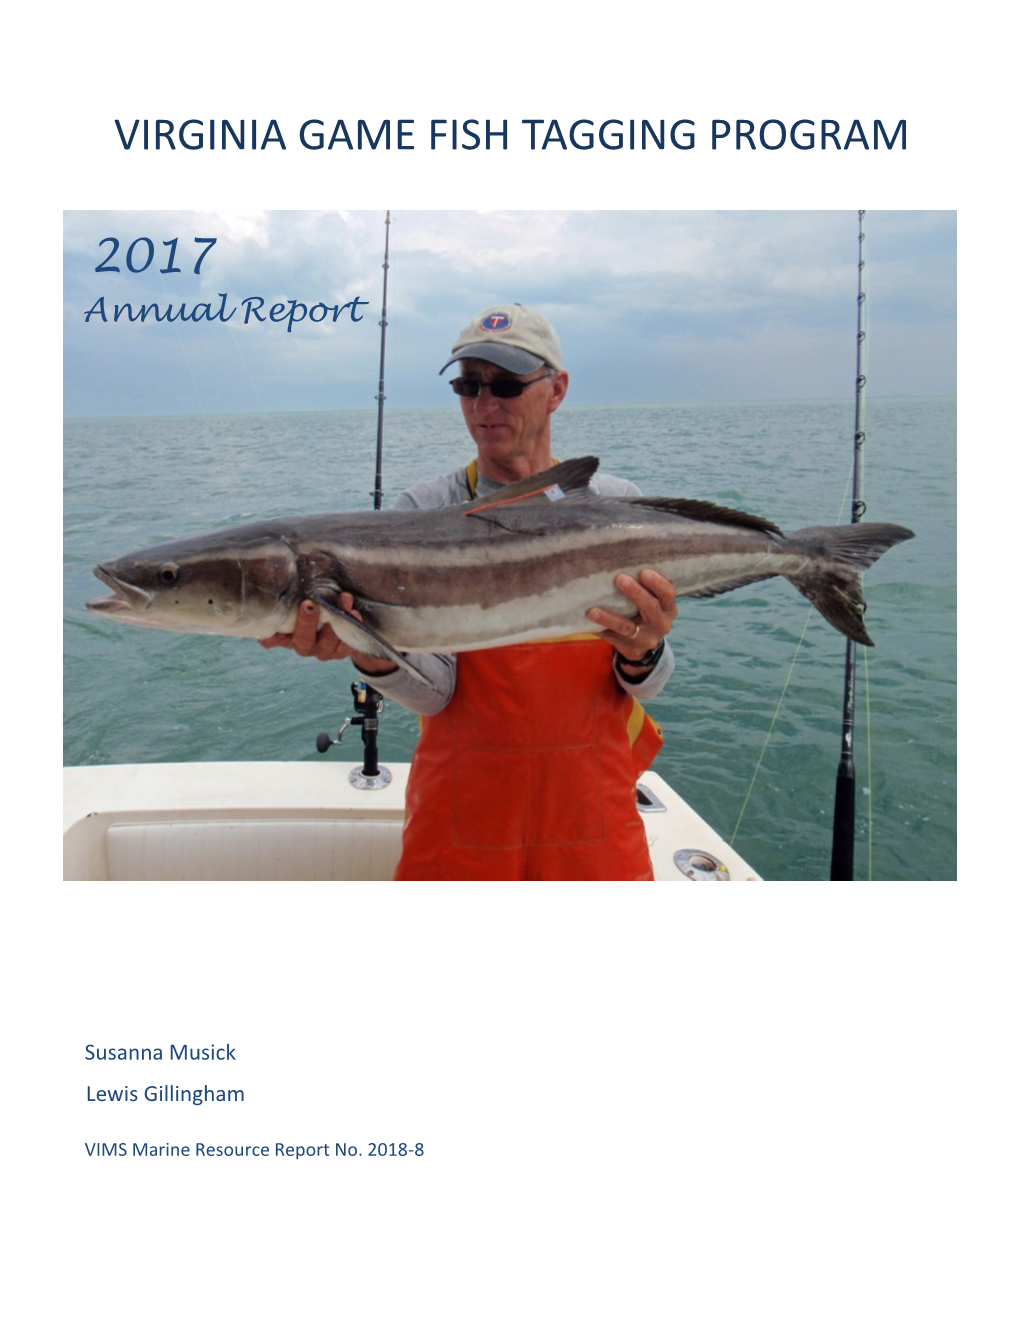 Virginia Game Fish Tagging Program Annual Report 2017